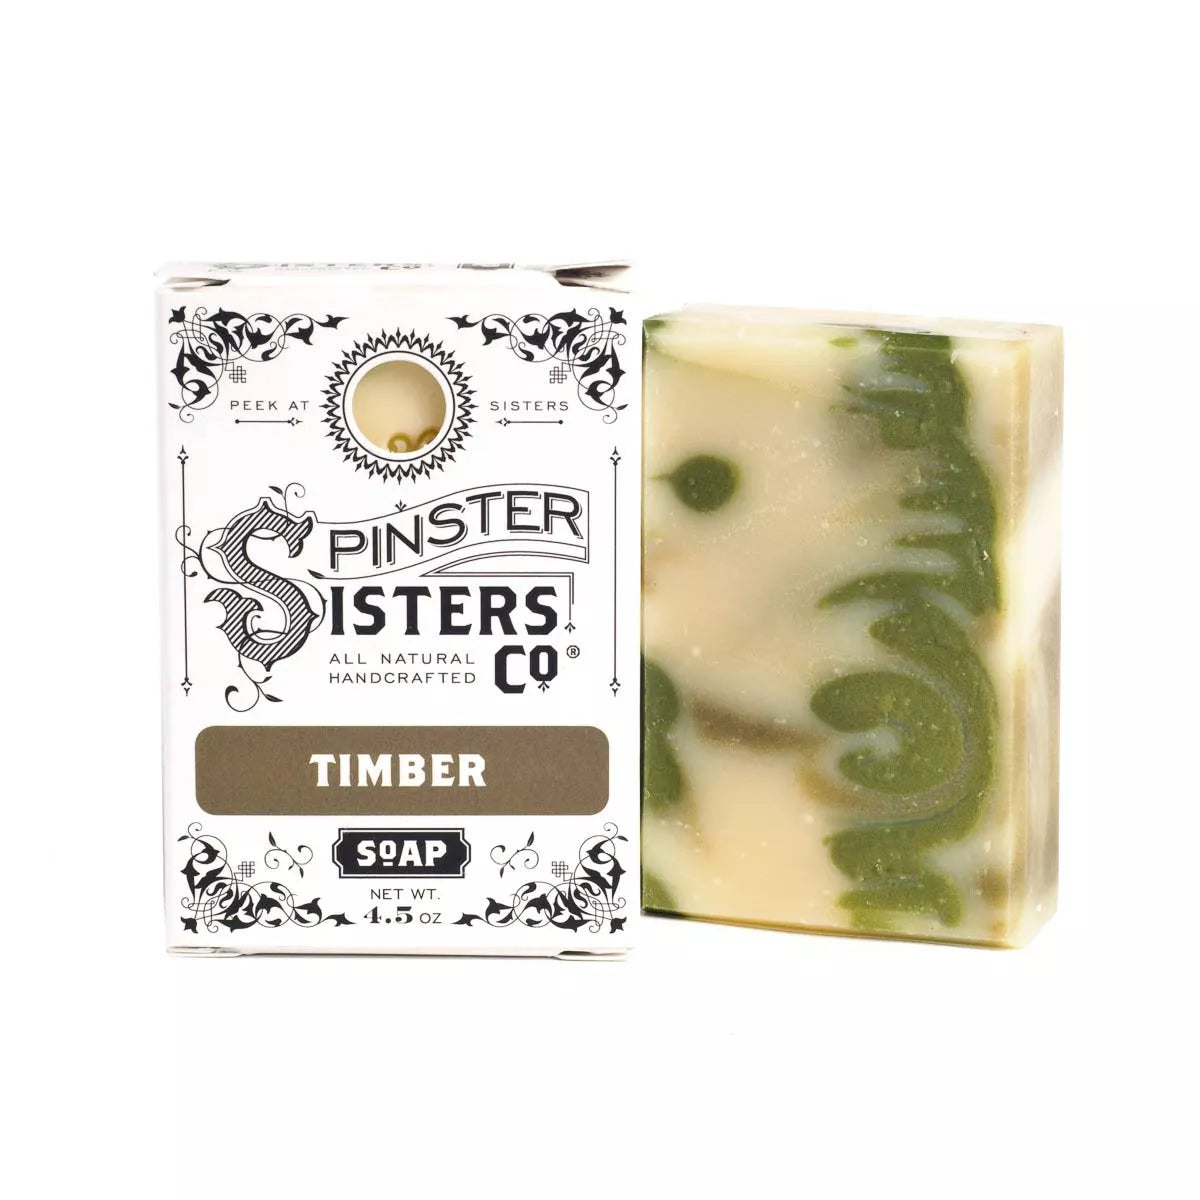 Handmade bath soap in Timber with cedar, cypress, spruce, and juniper essential oils